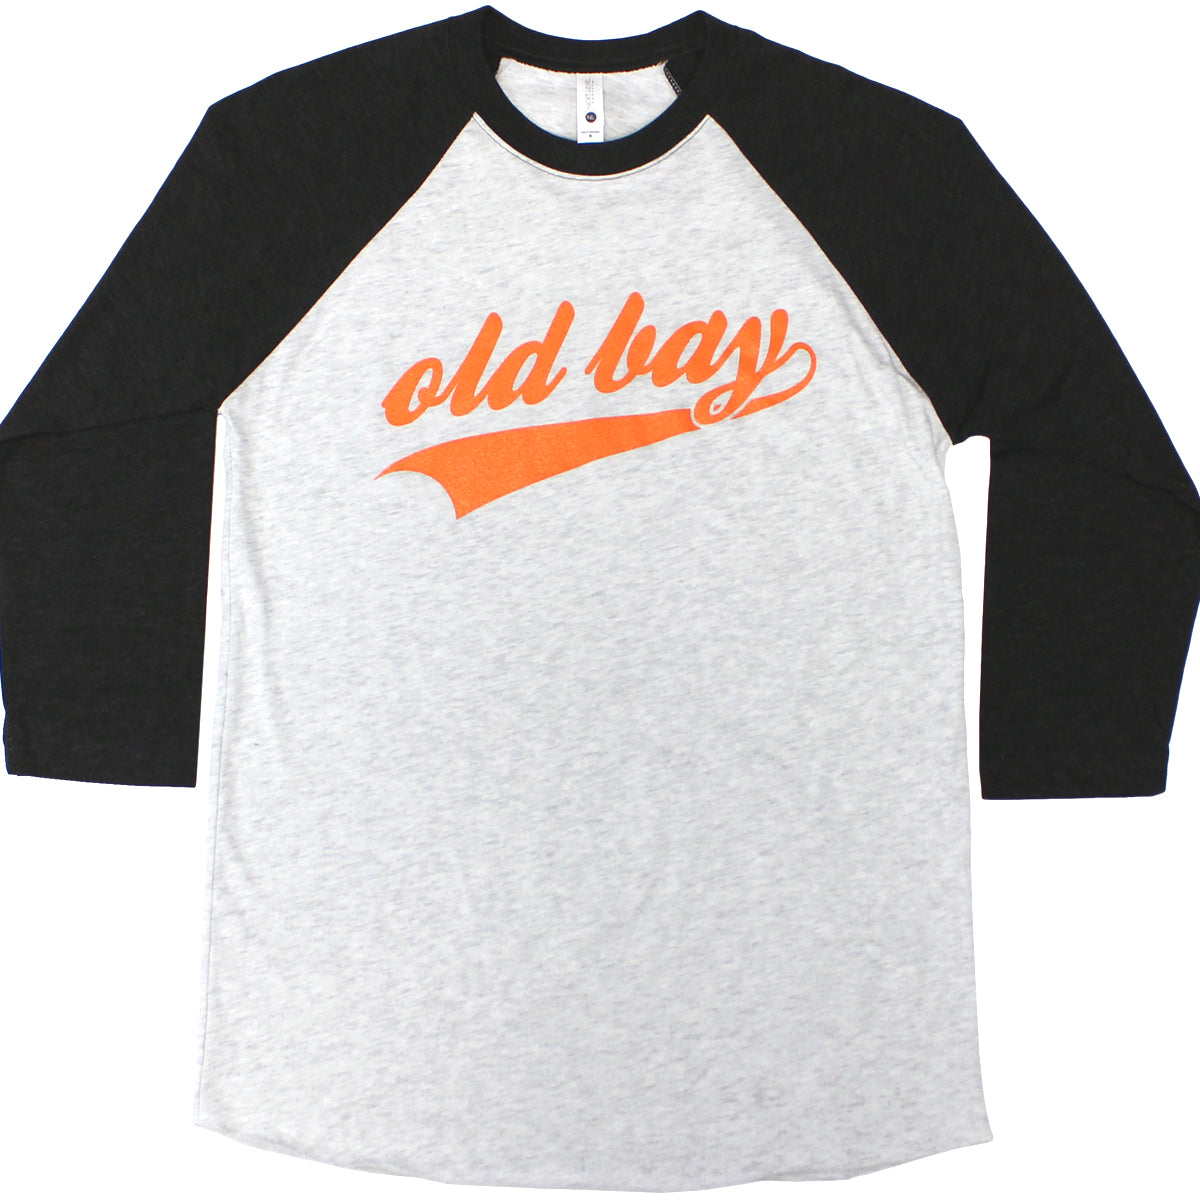 OLD BAY Script (Black & White) / Vintage Baseball Jersey